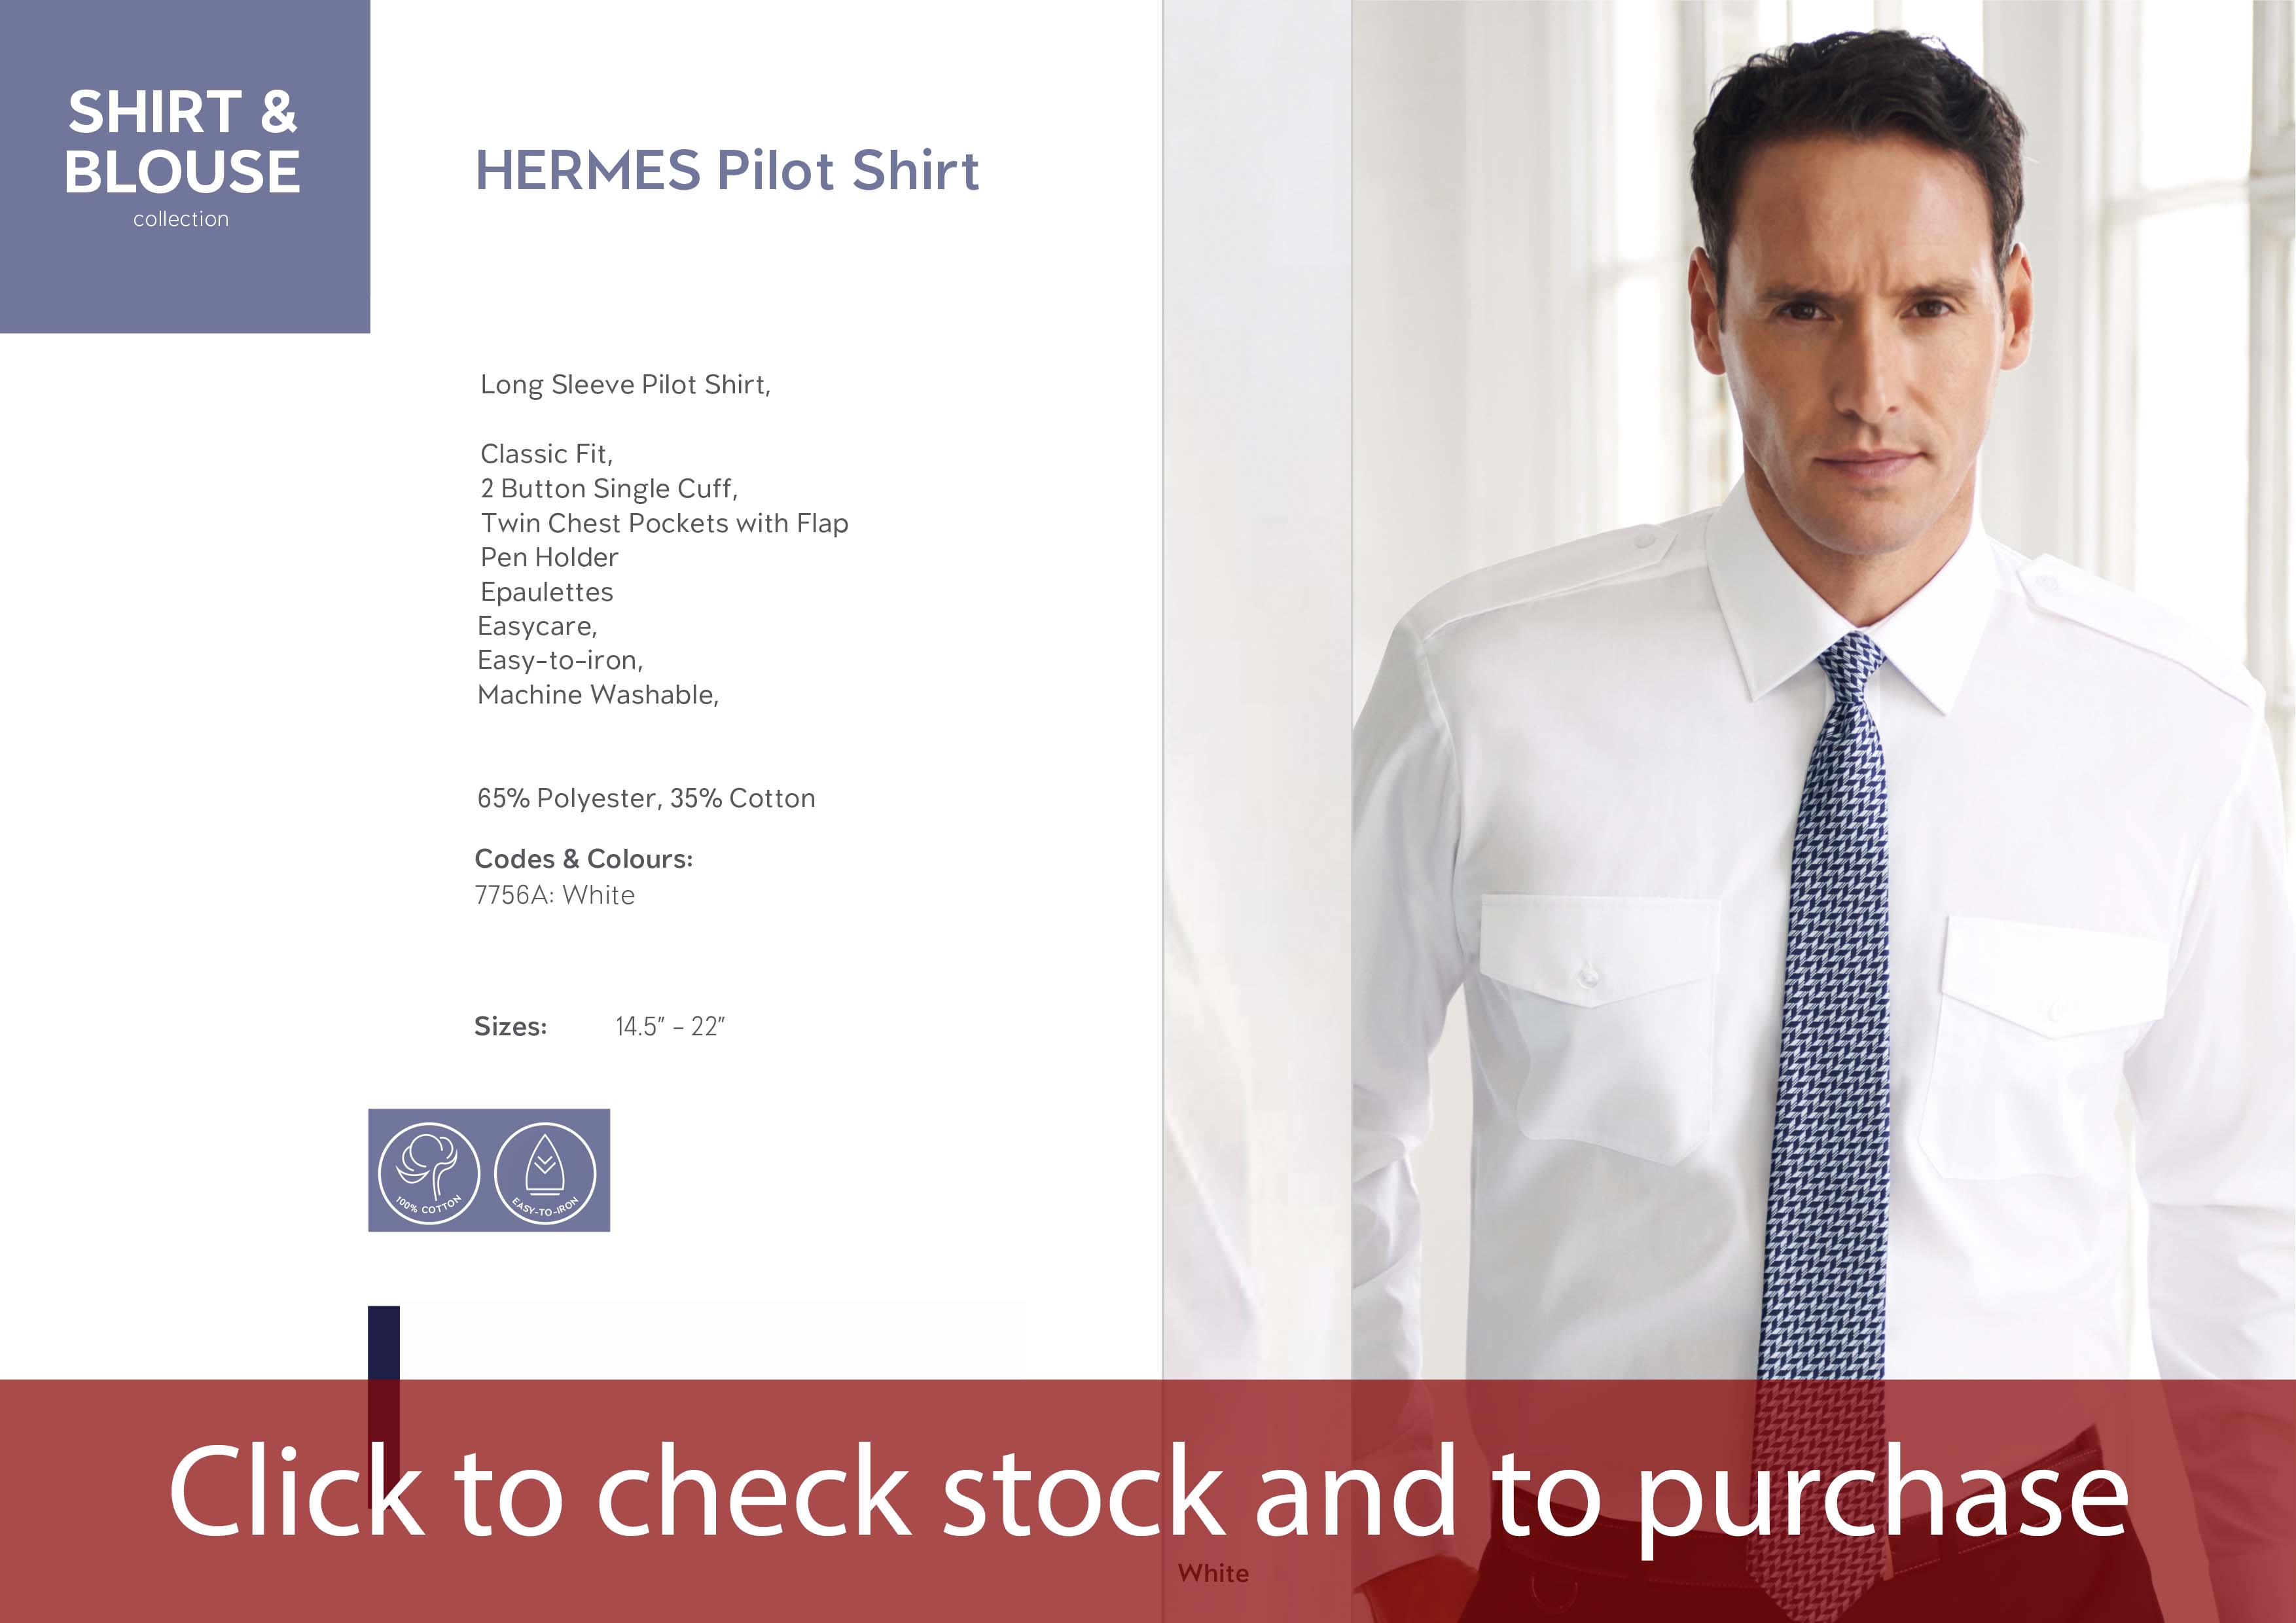 Hermes pilot shirt